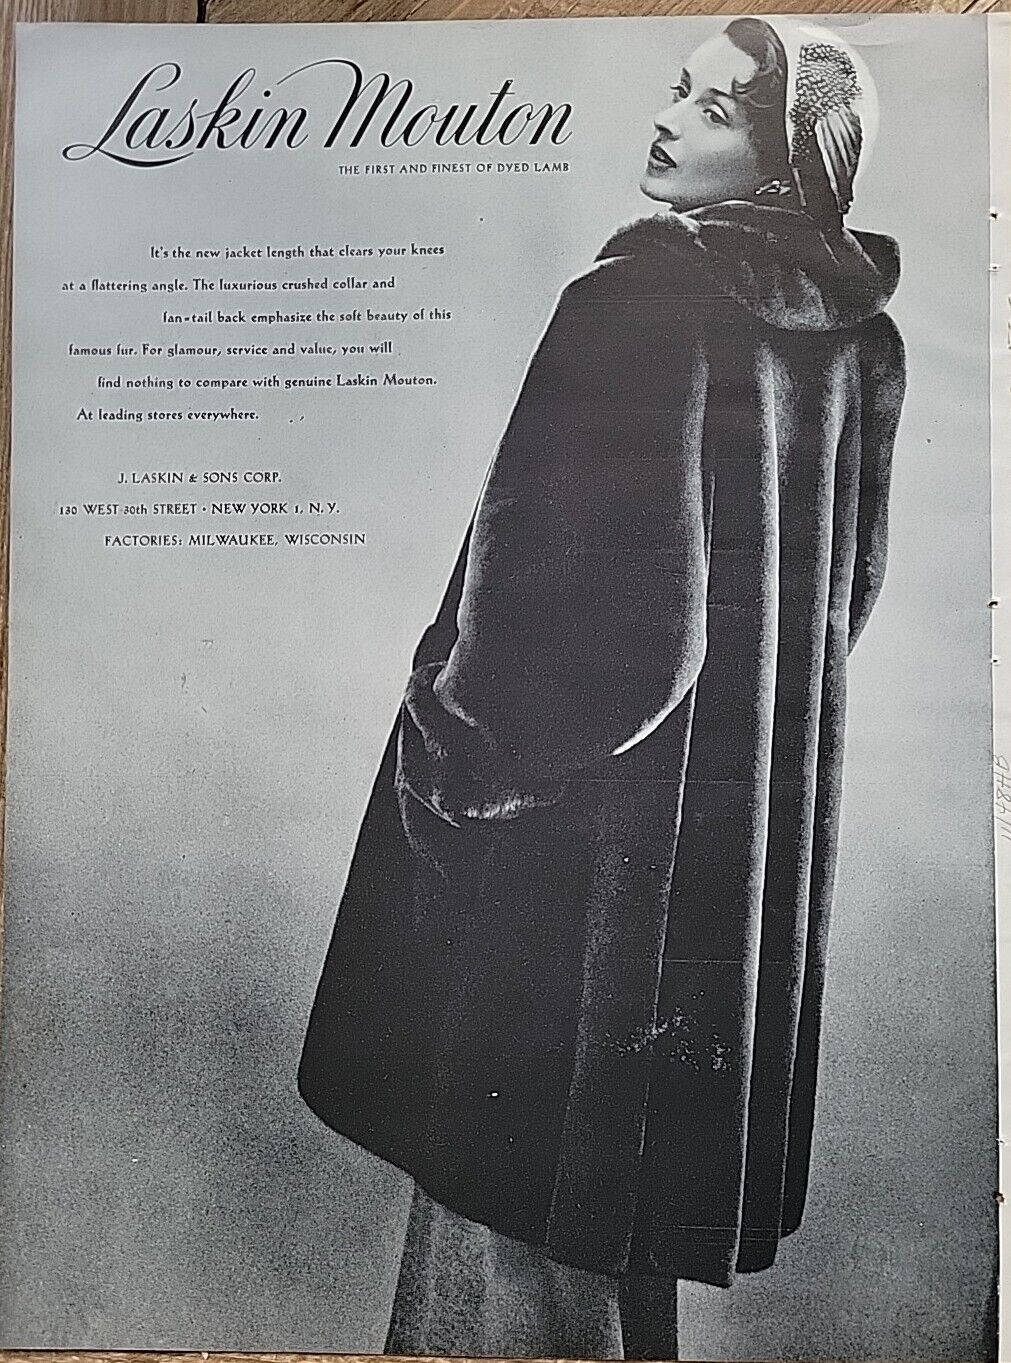 1948 Womens Laskin Mouton Dyed Lamb Fur Coat Vintag Fashion Vintage ad